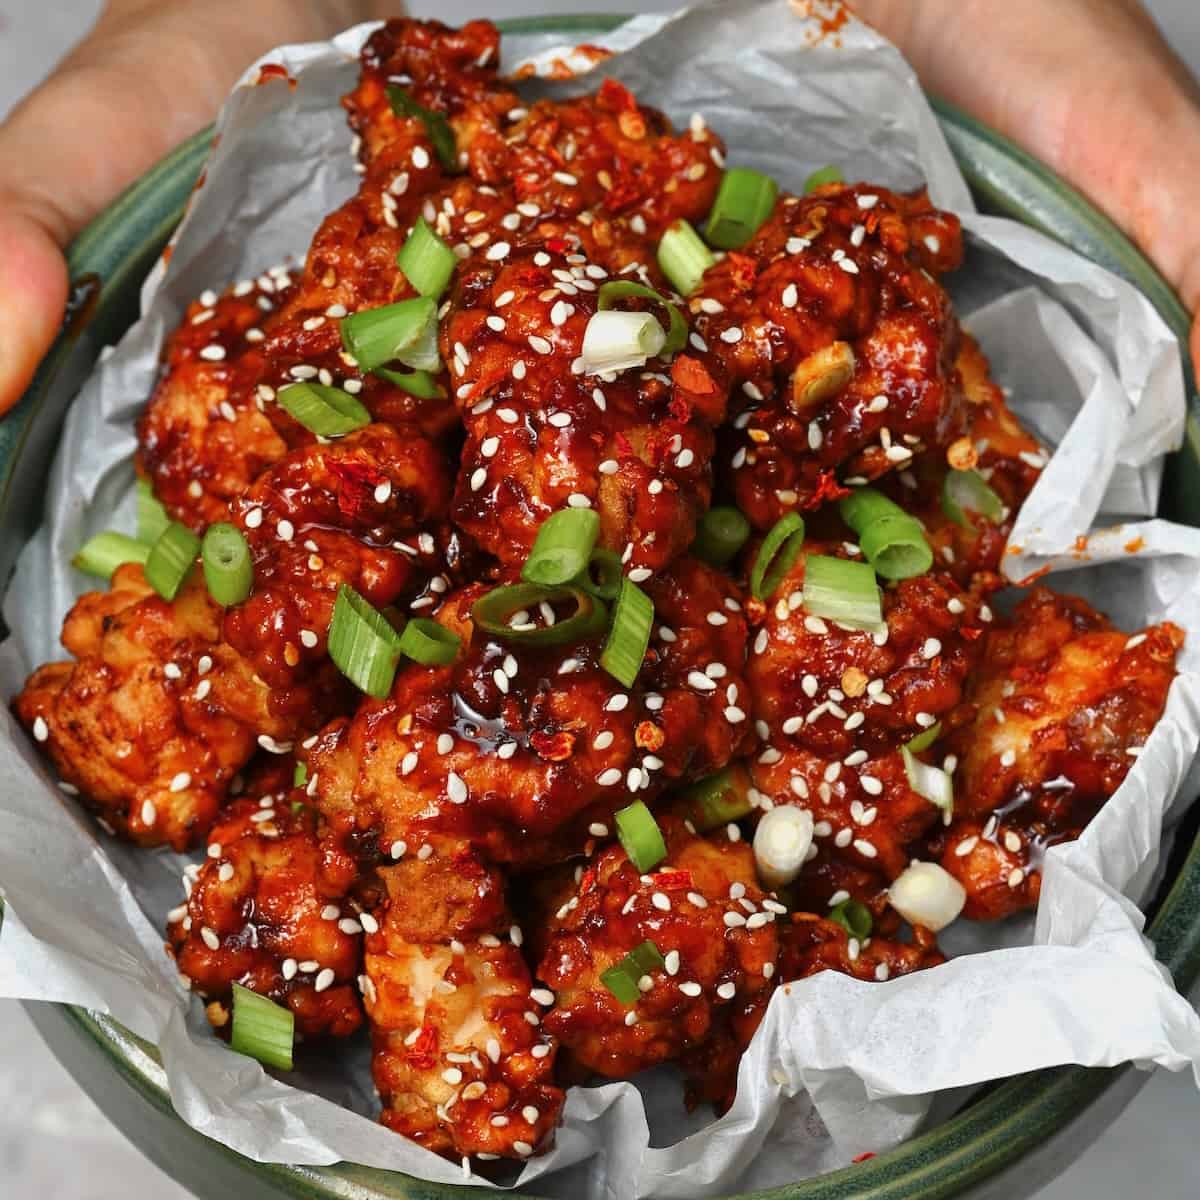 Homemade] Korean Fried Chicken : r/food